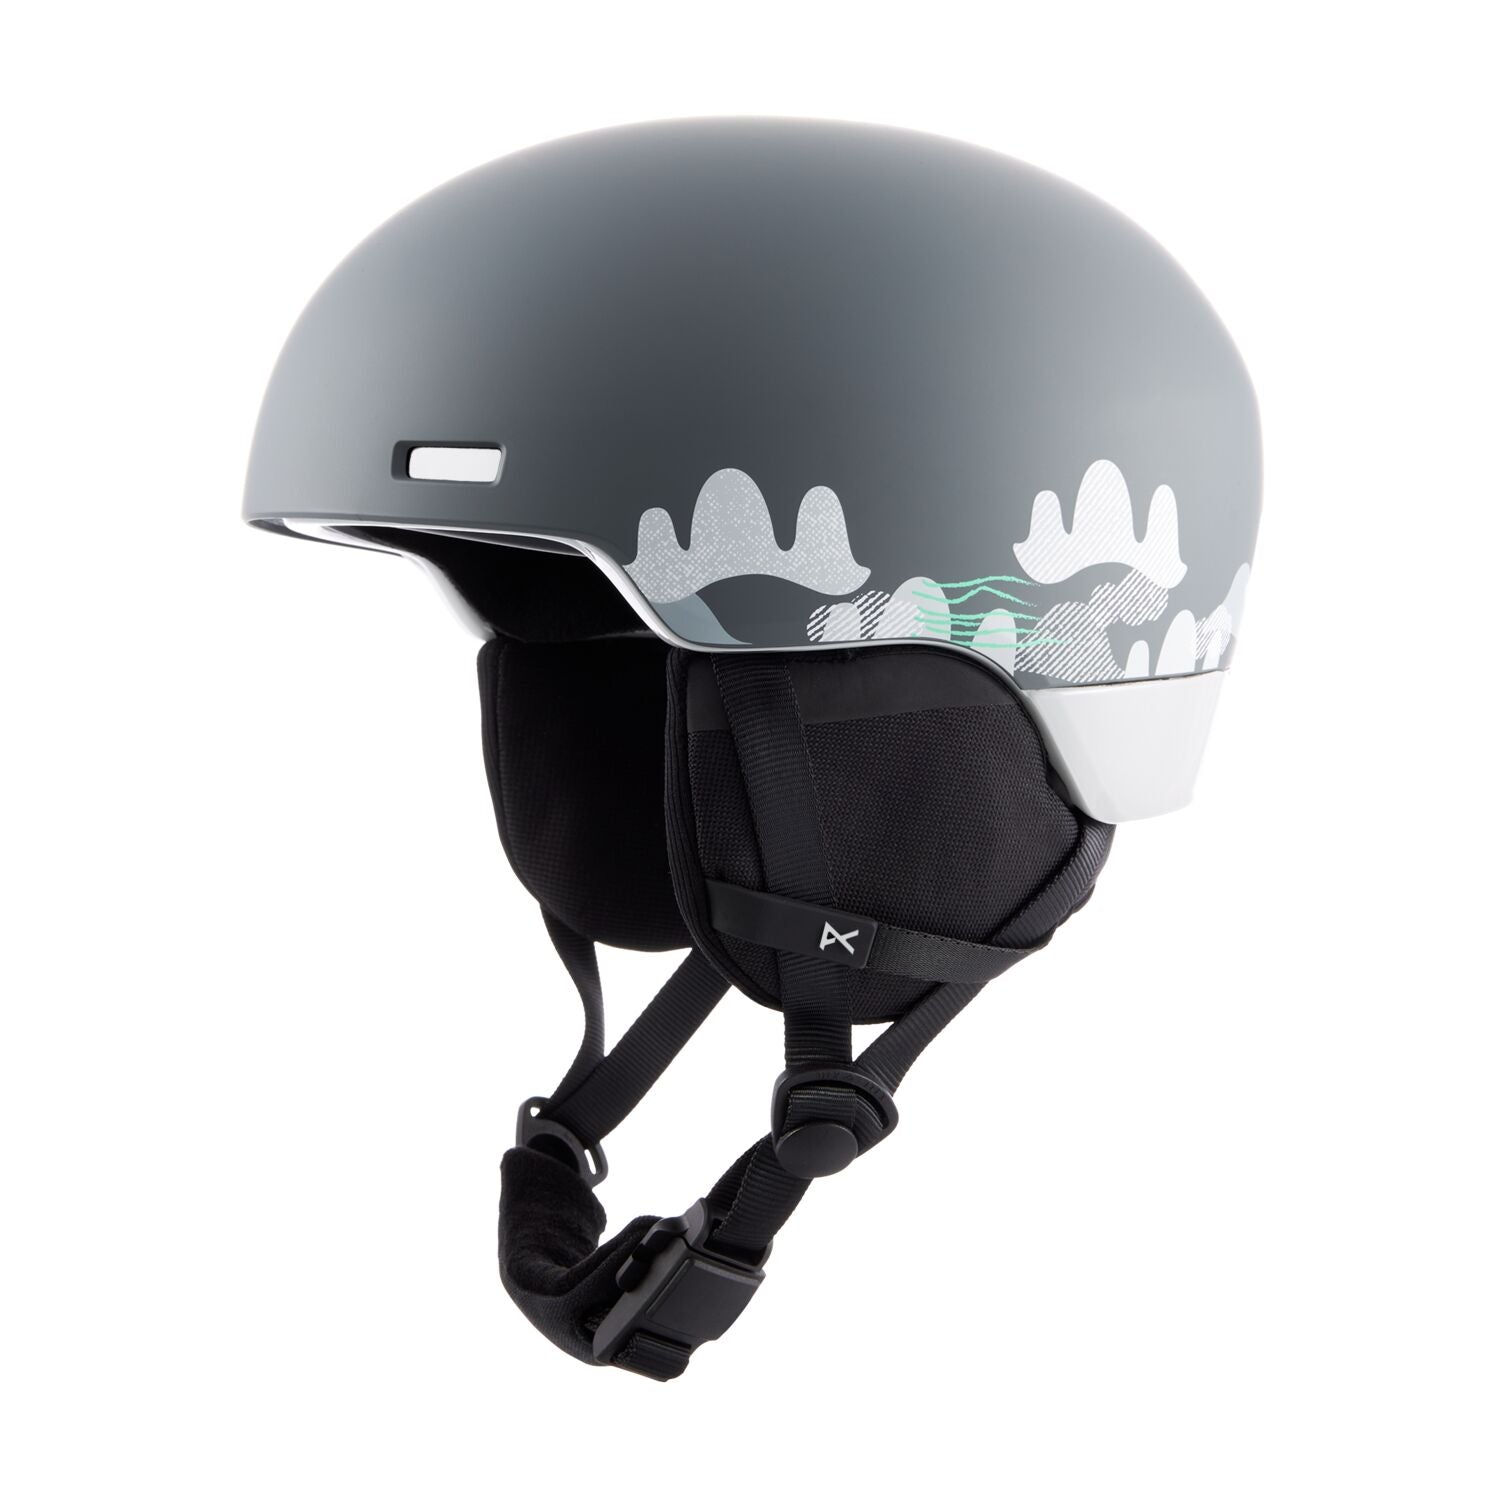 Anon Windham Wavecel Kids Helmet 2023 Mountain Stone 